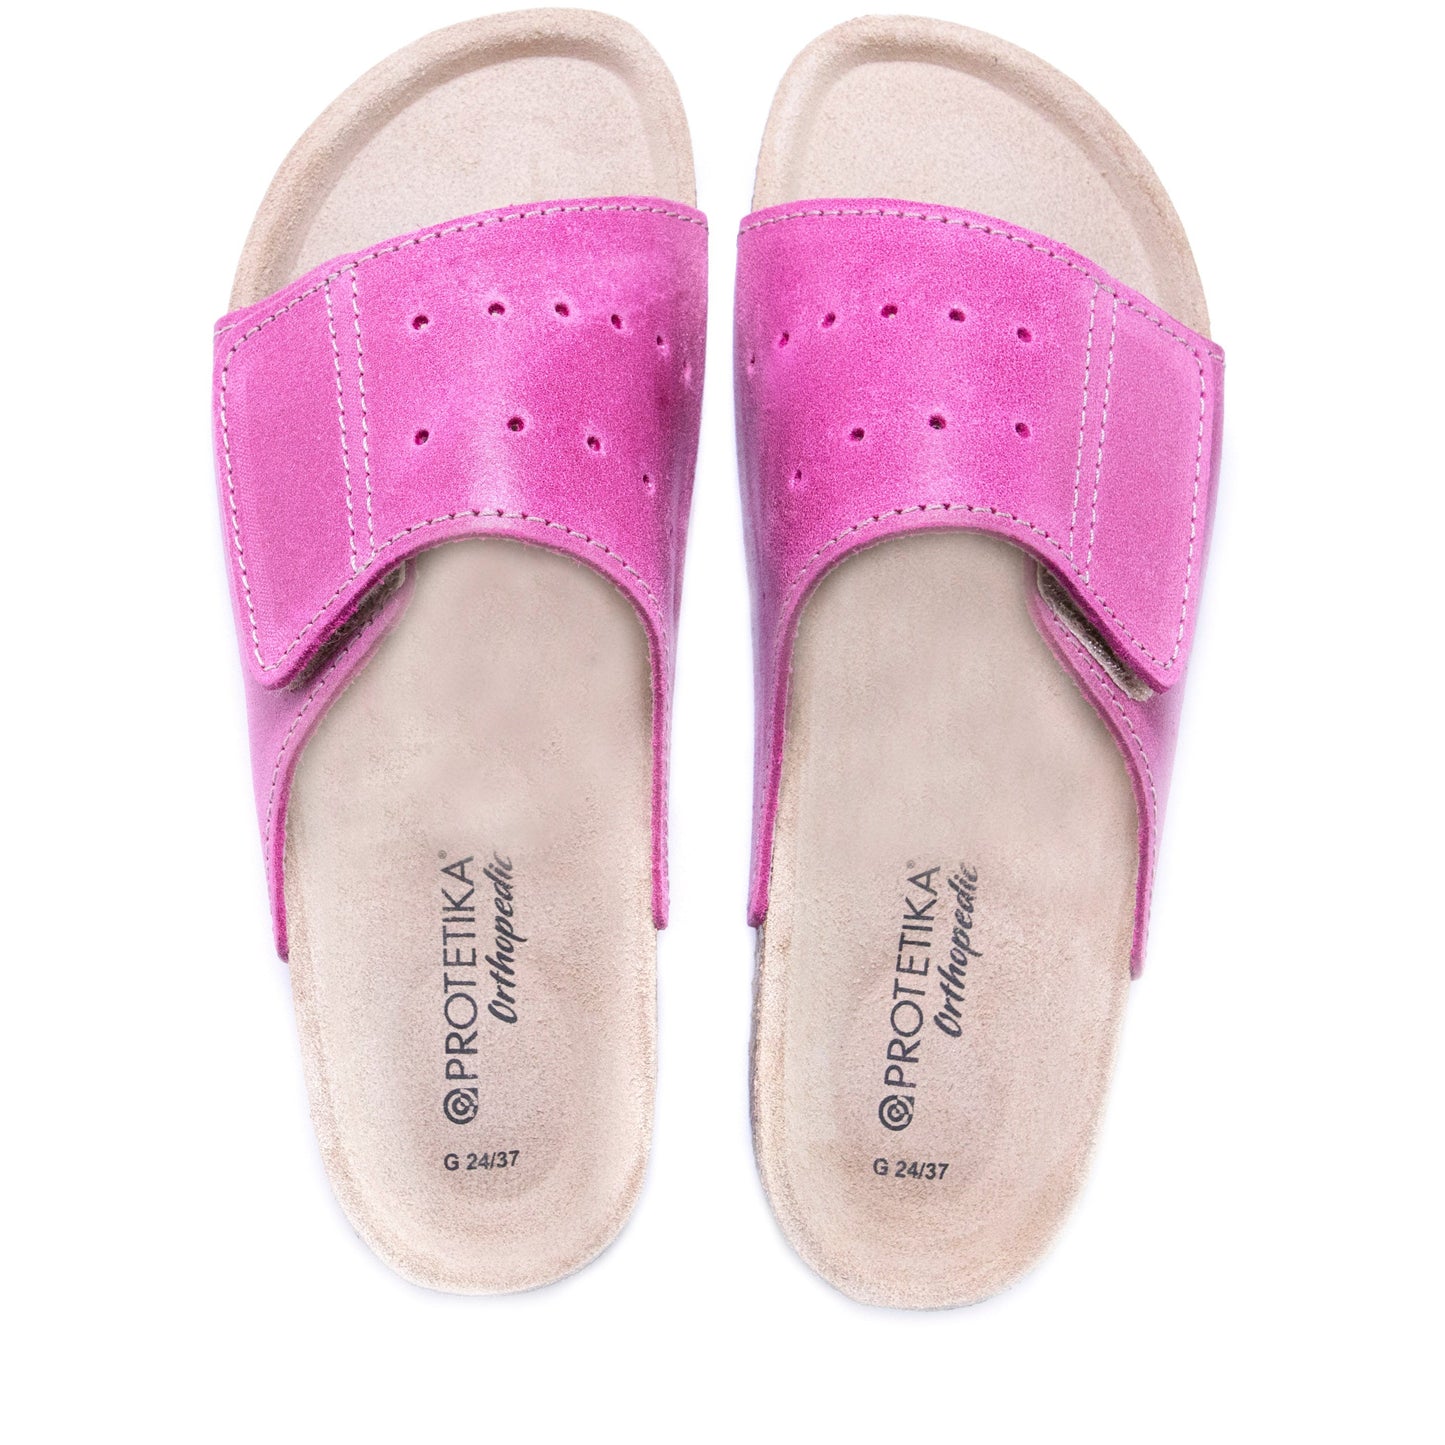 T56: color 80 - pink ladies orthotic sandals